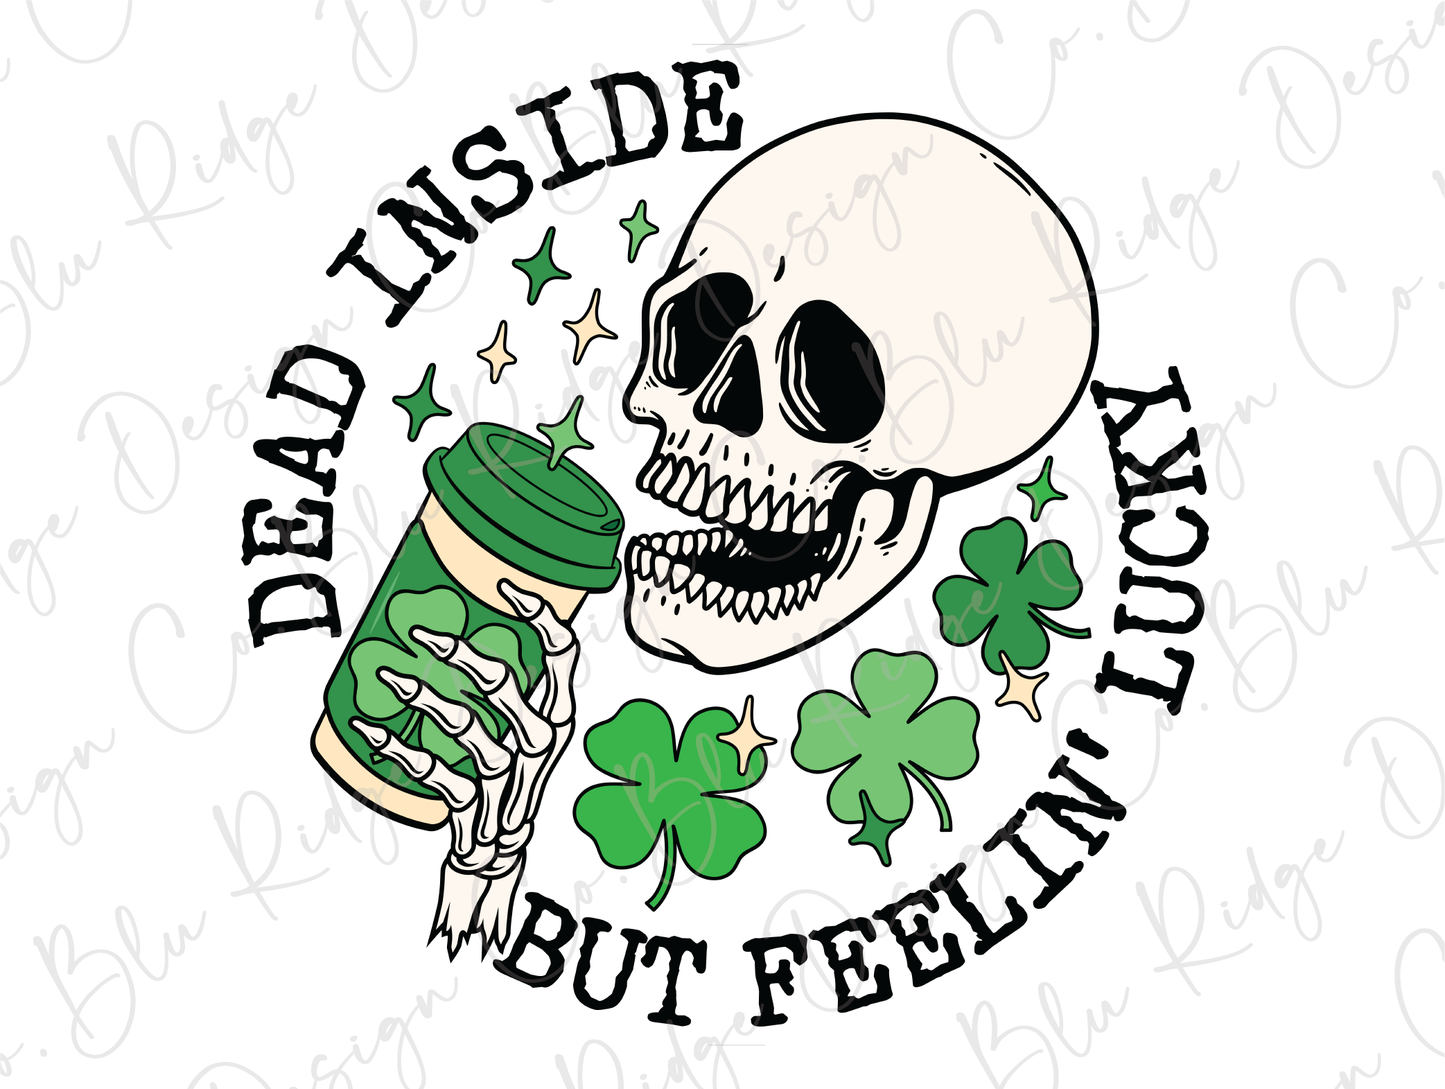 Dead Inside But Feeling Lucky St Patrick's Day Skeleton Direct To Film (DTF) Transfer